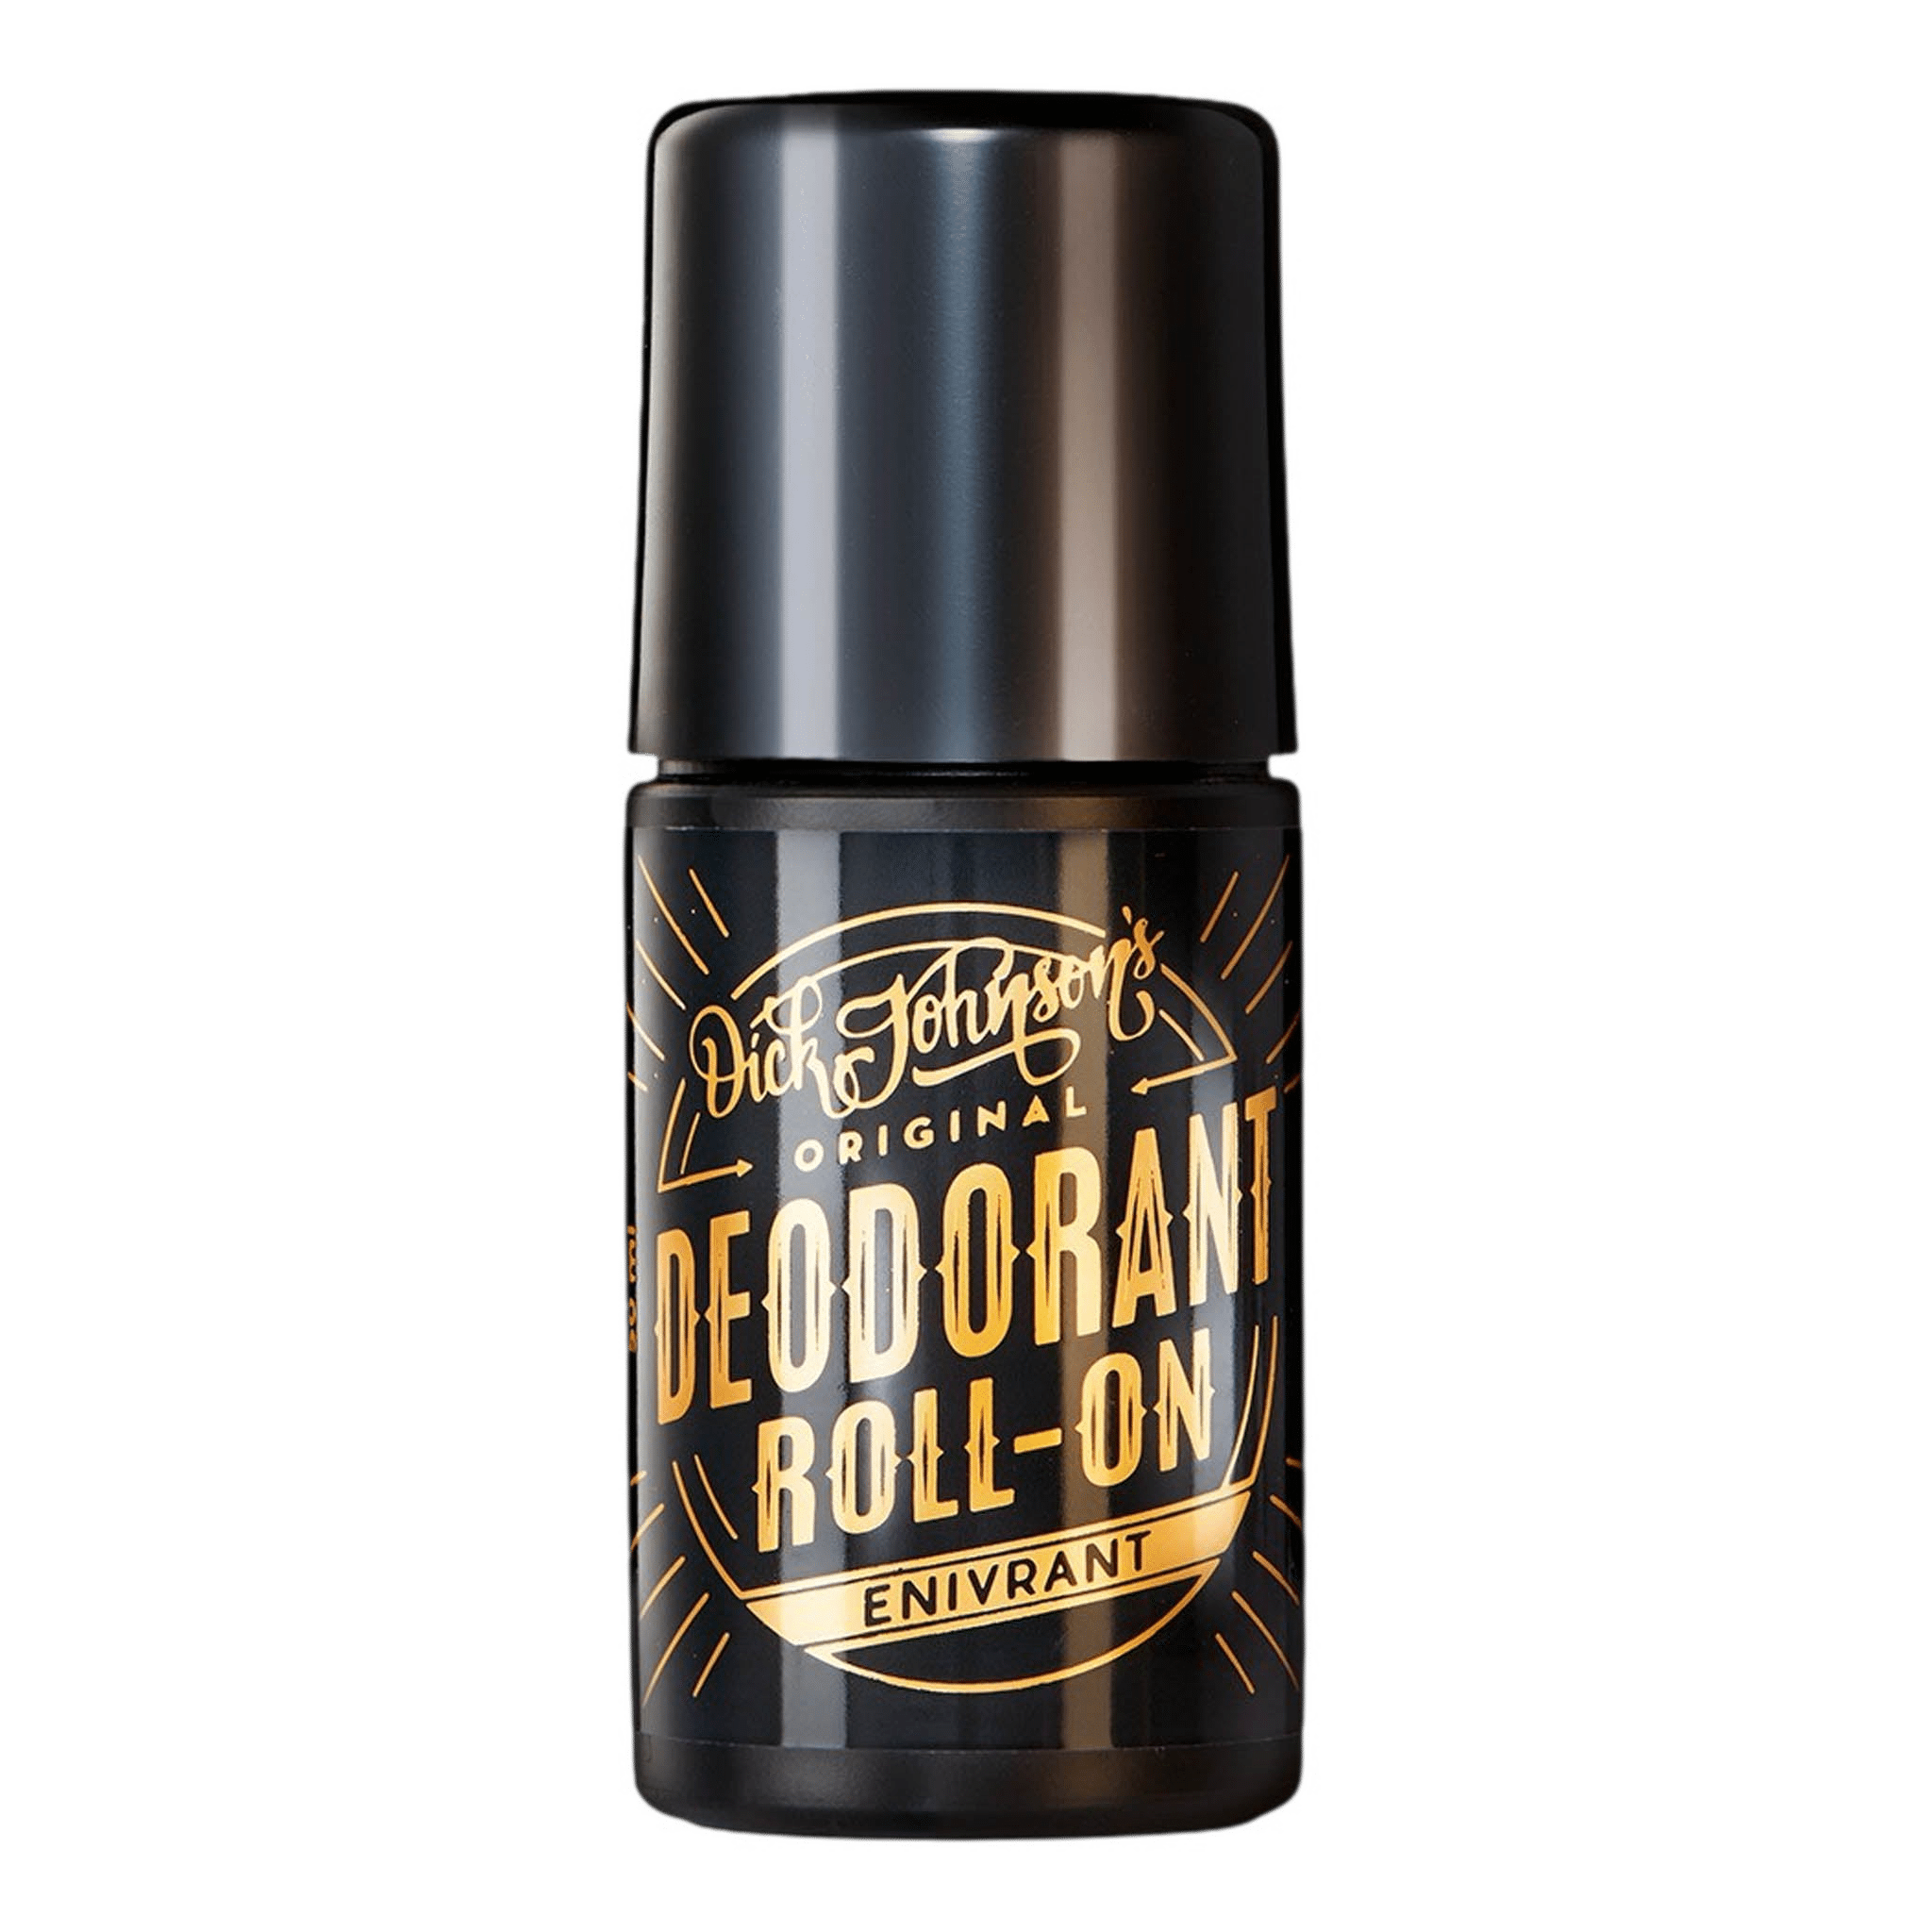 Dick Johnson Enivrant deodorant